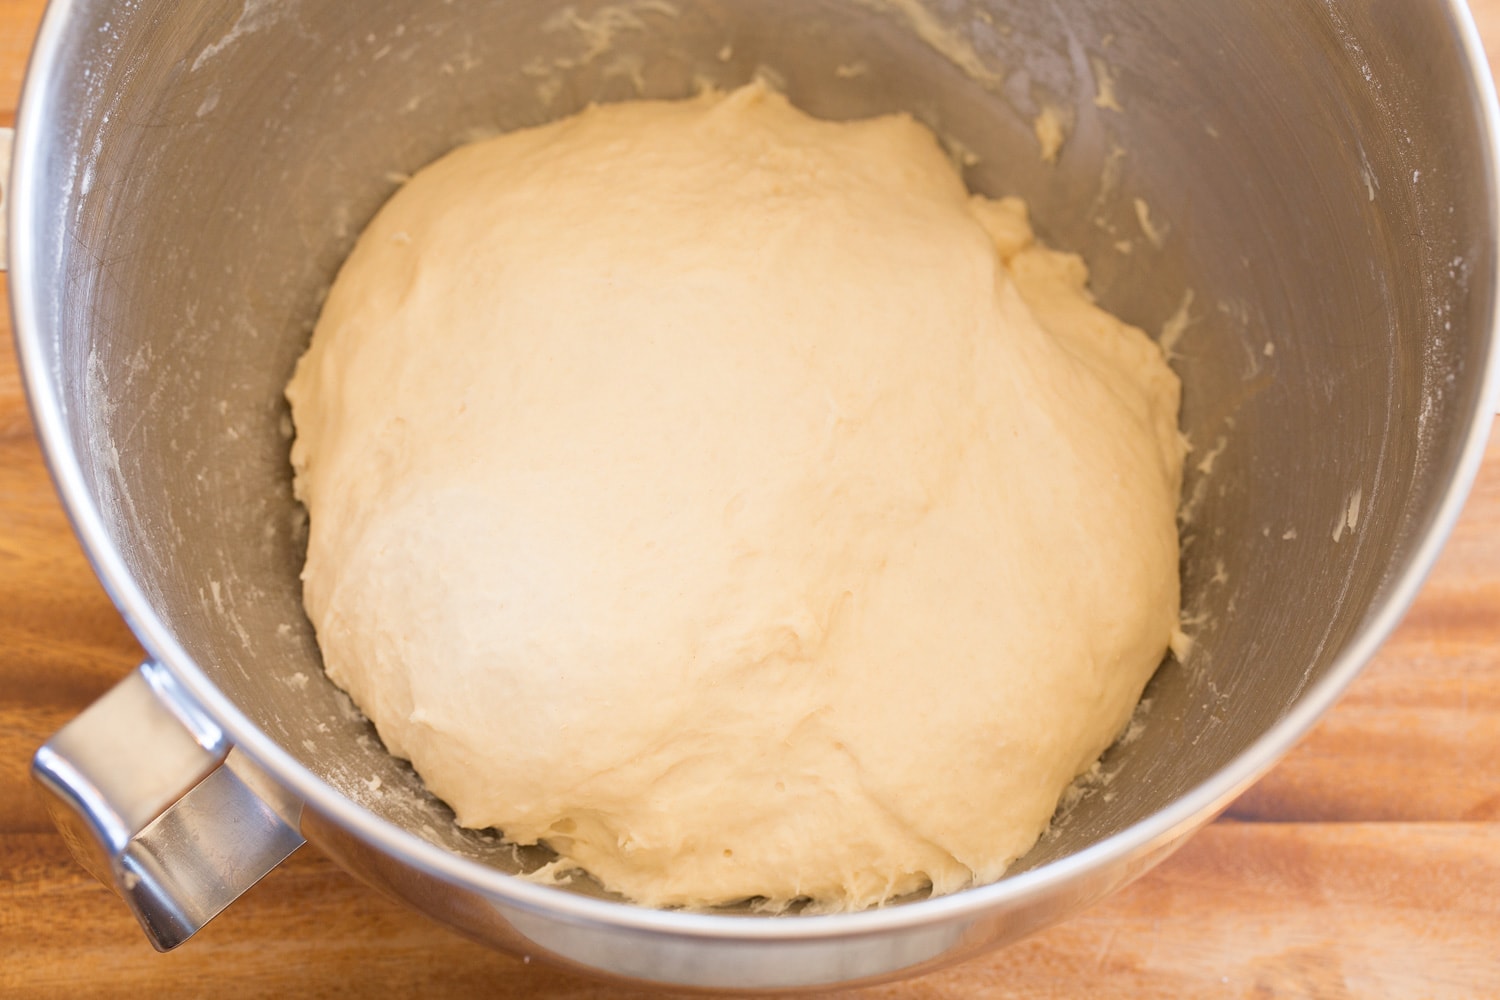 Puffy roll dough.